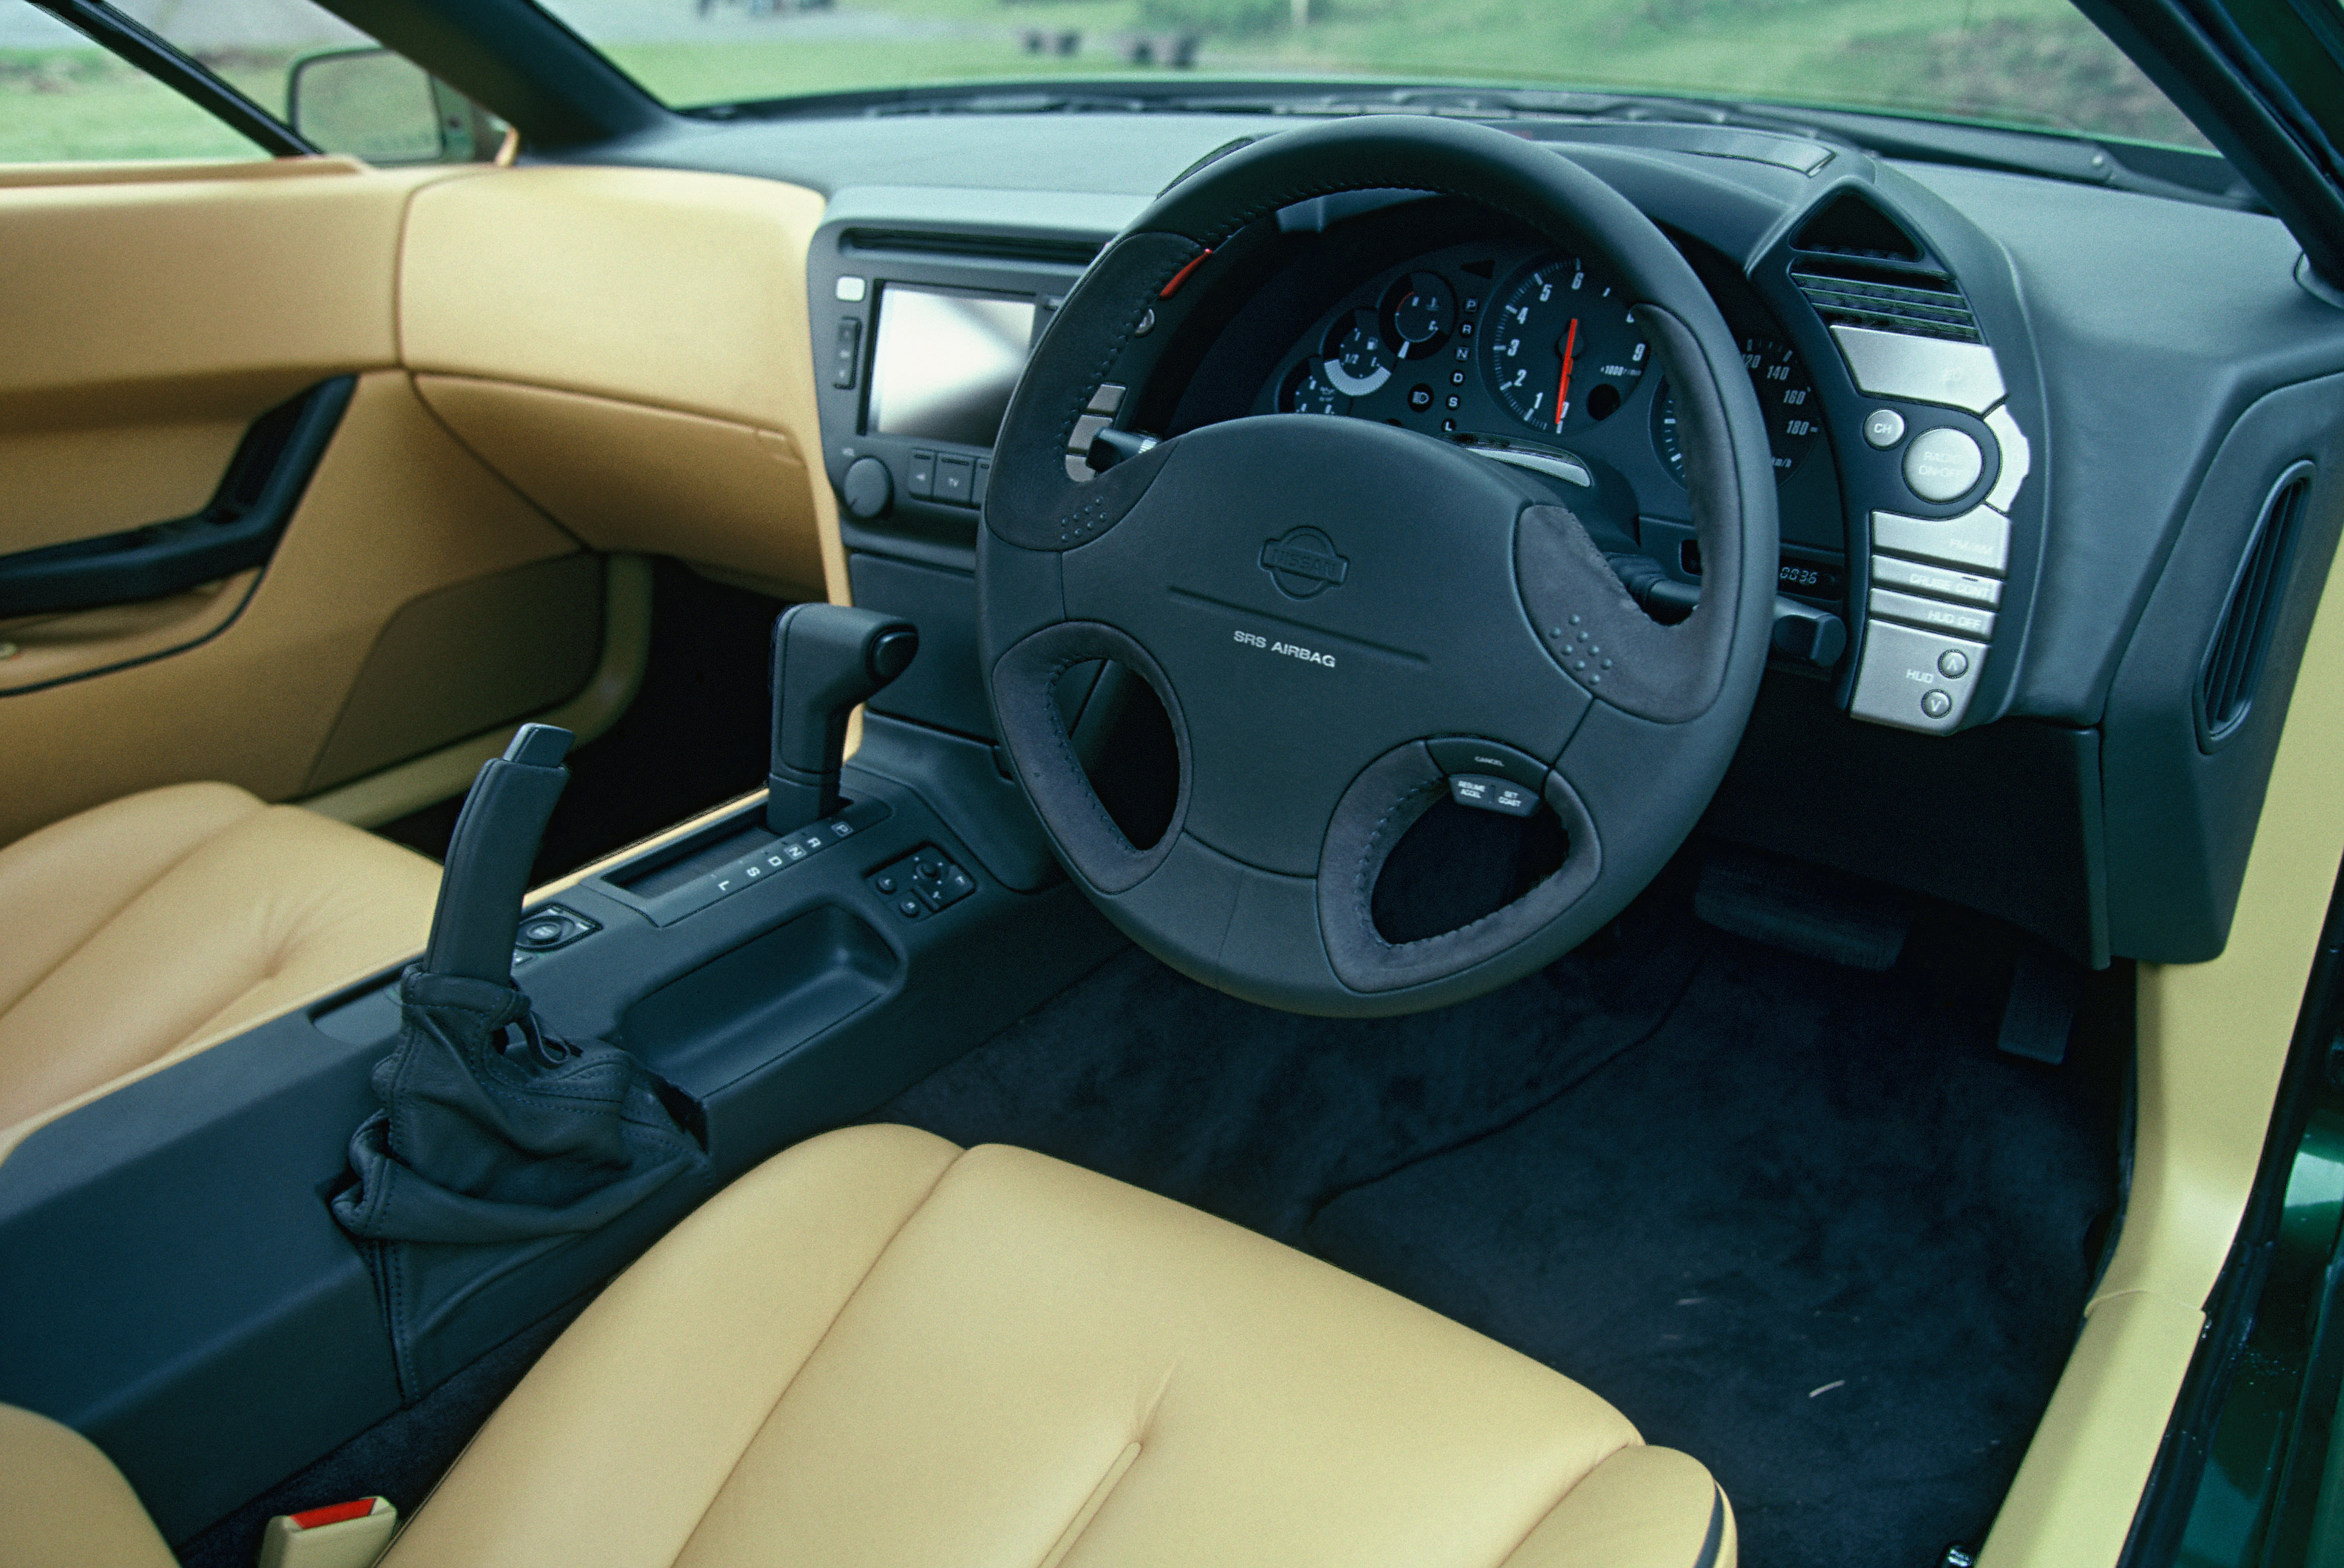 Nissan AP-X Concept, 1993 - Interior